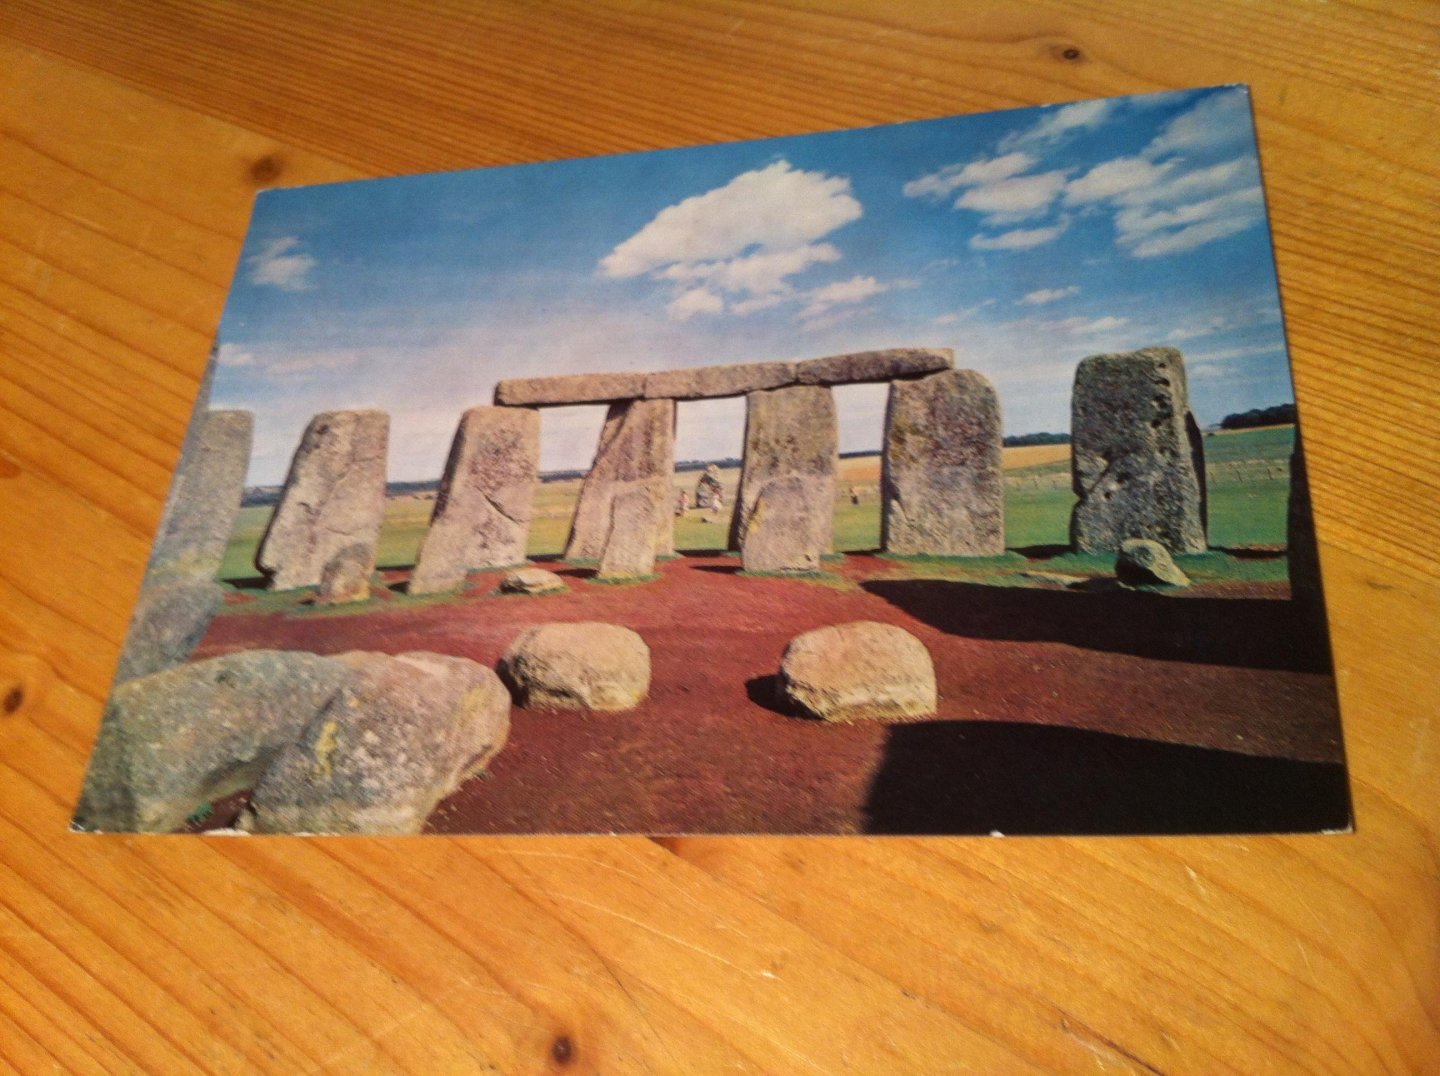 Hoyle ea, drie items over Stonehenge - On Stonehenge, ansichtkaart in kleur, brochure